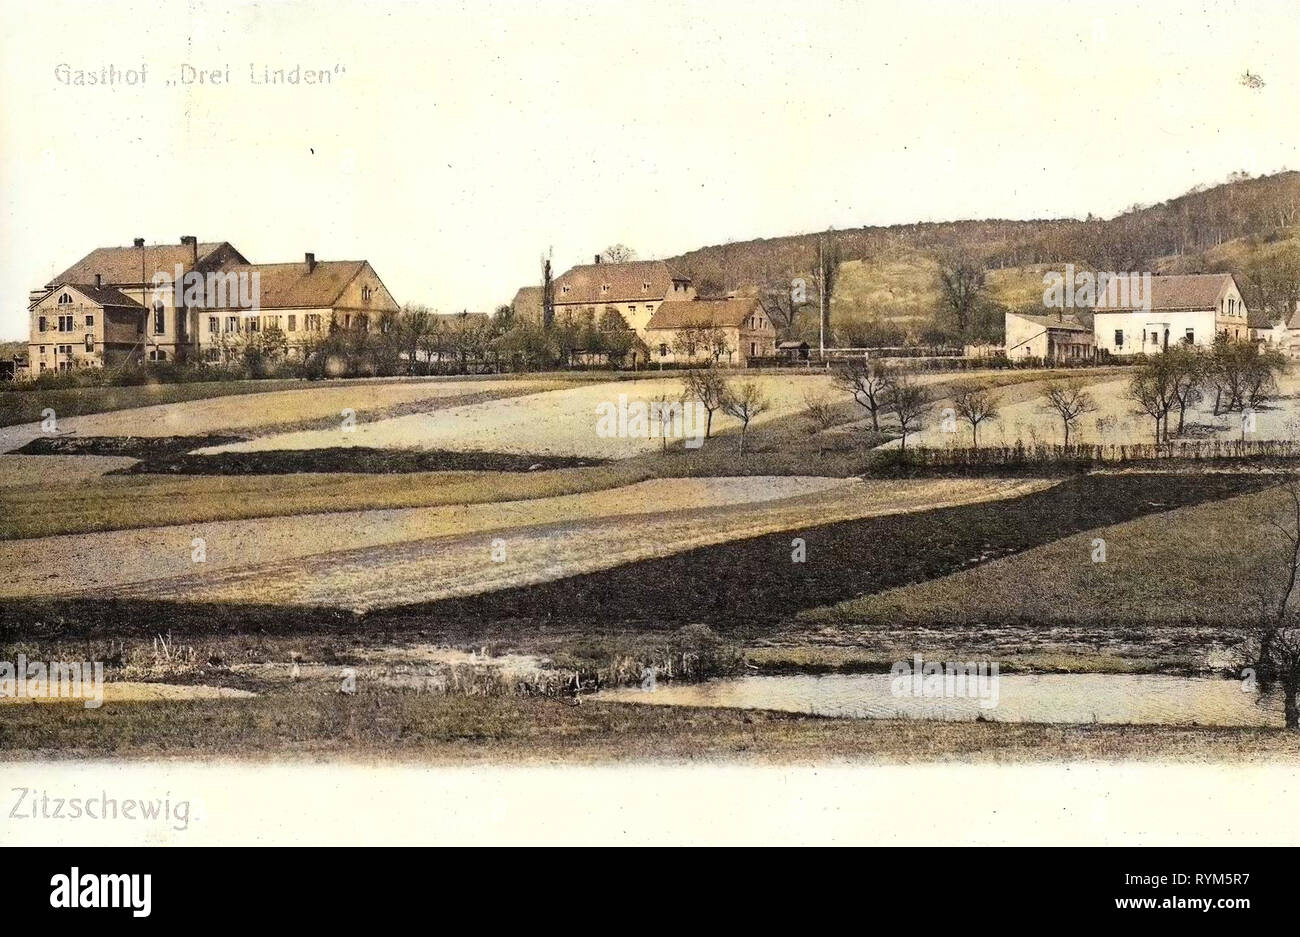 Gasthof Drei Linden 1903, Landkreis Meißen, Zitzschewig, Alemania Foto de stock